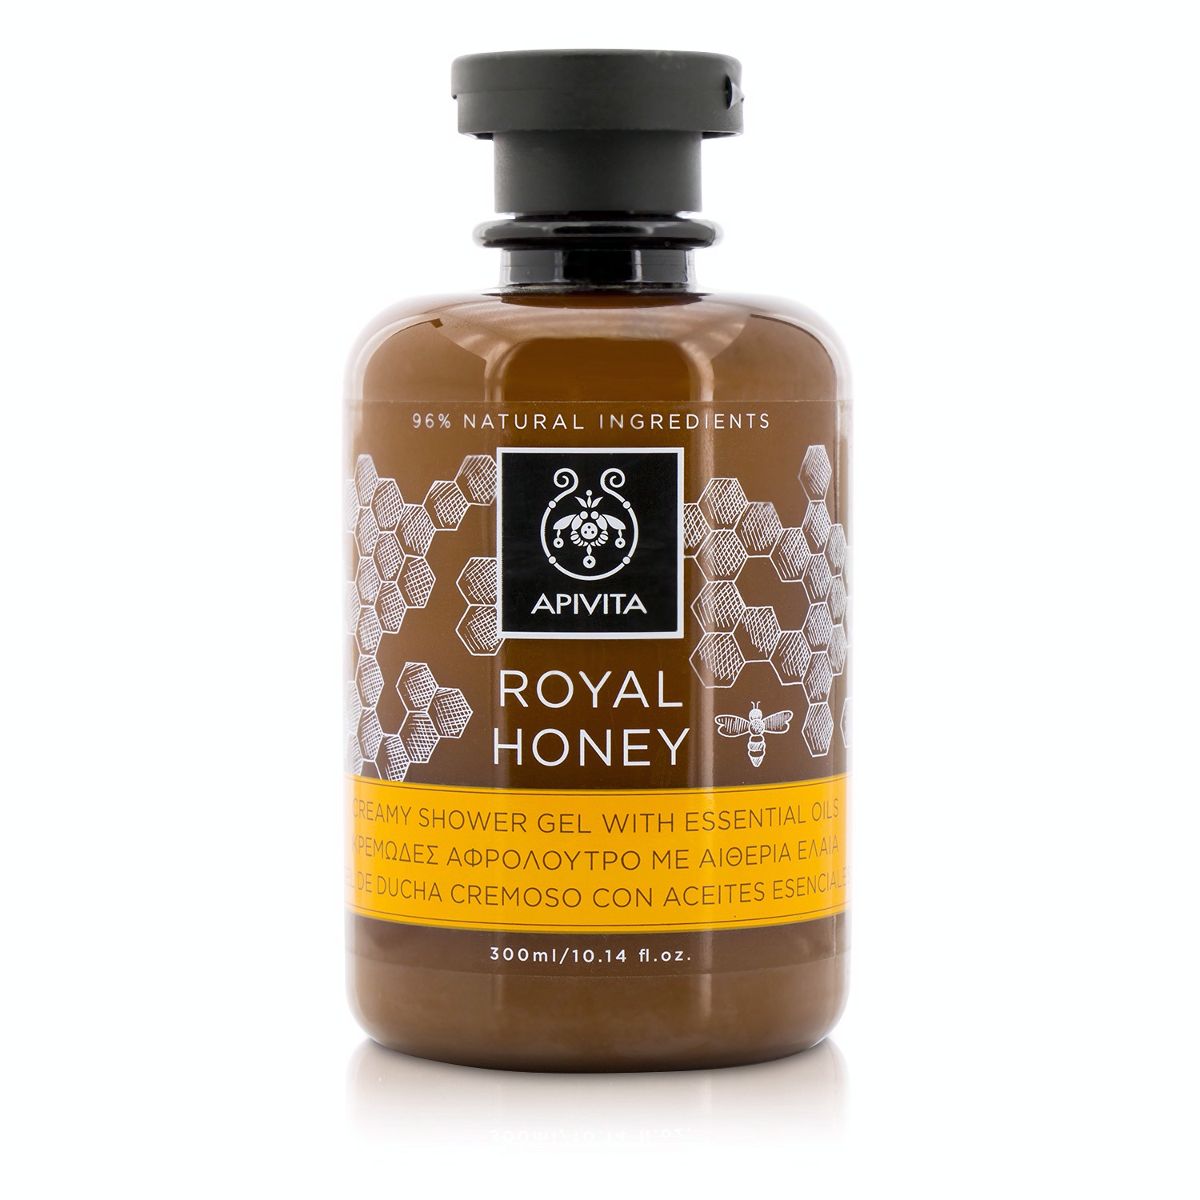 Royal Honey Creamy Shower Gel With Essential Oils Apivita Image